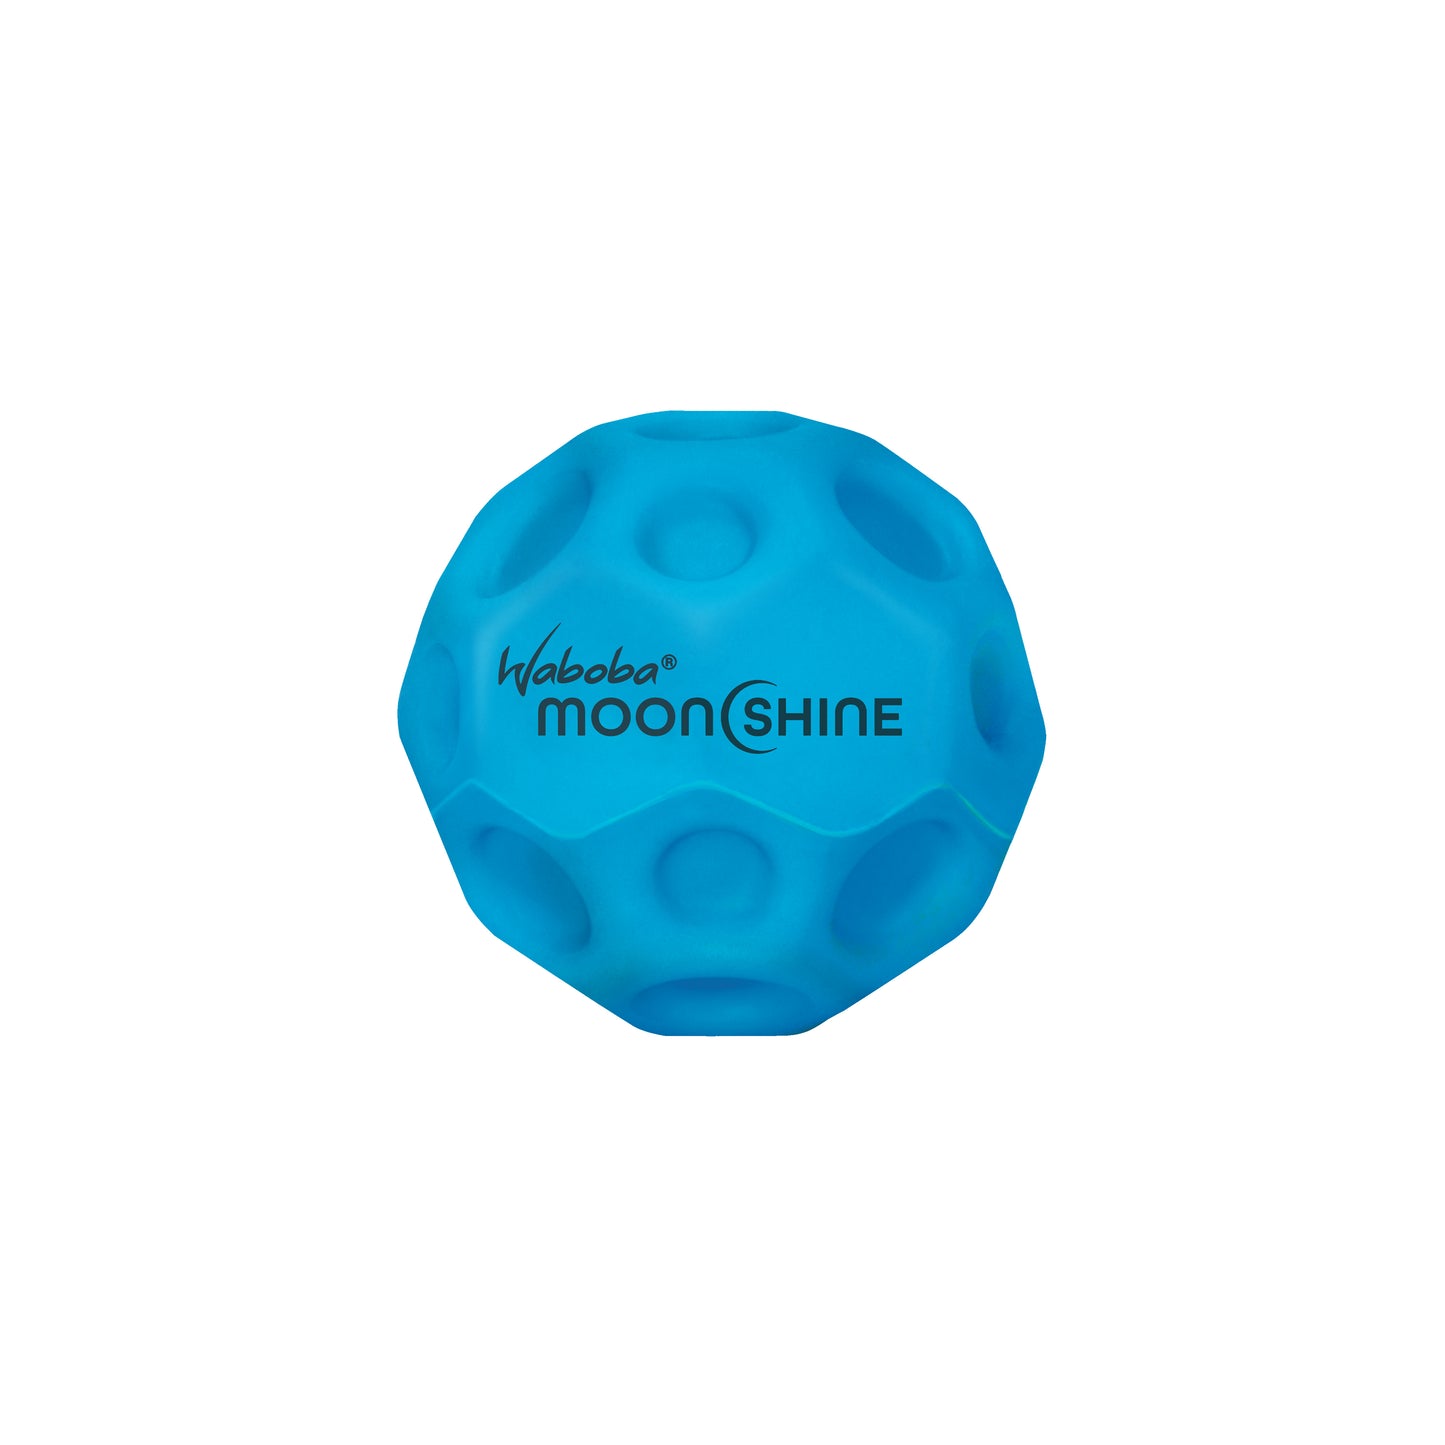 Waboba Moonshine Moon Ball